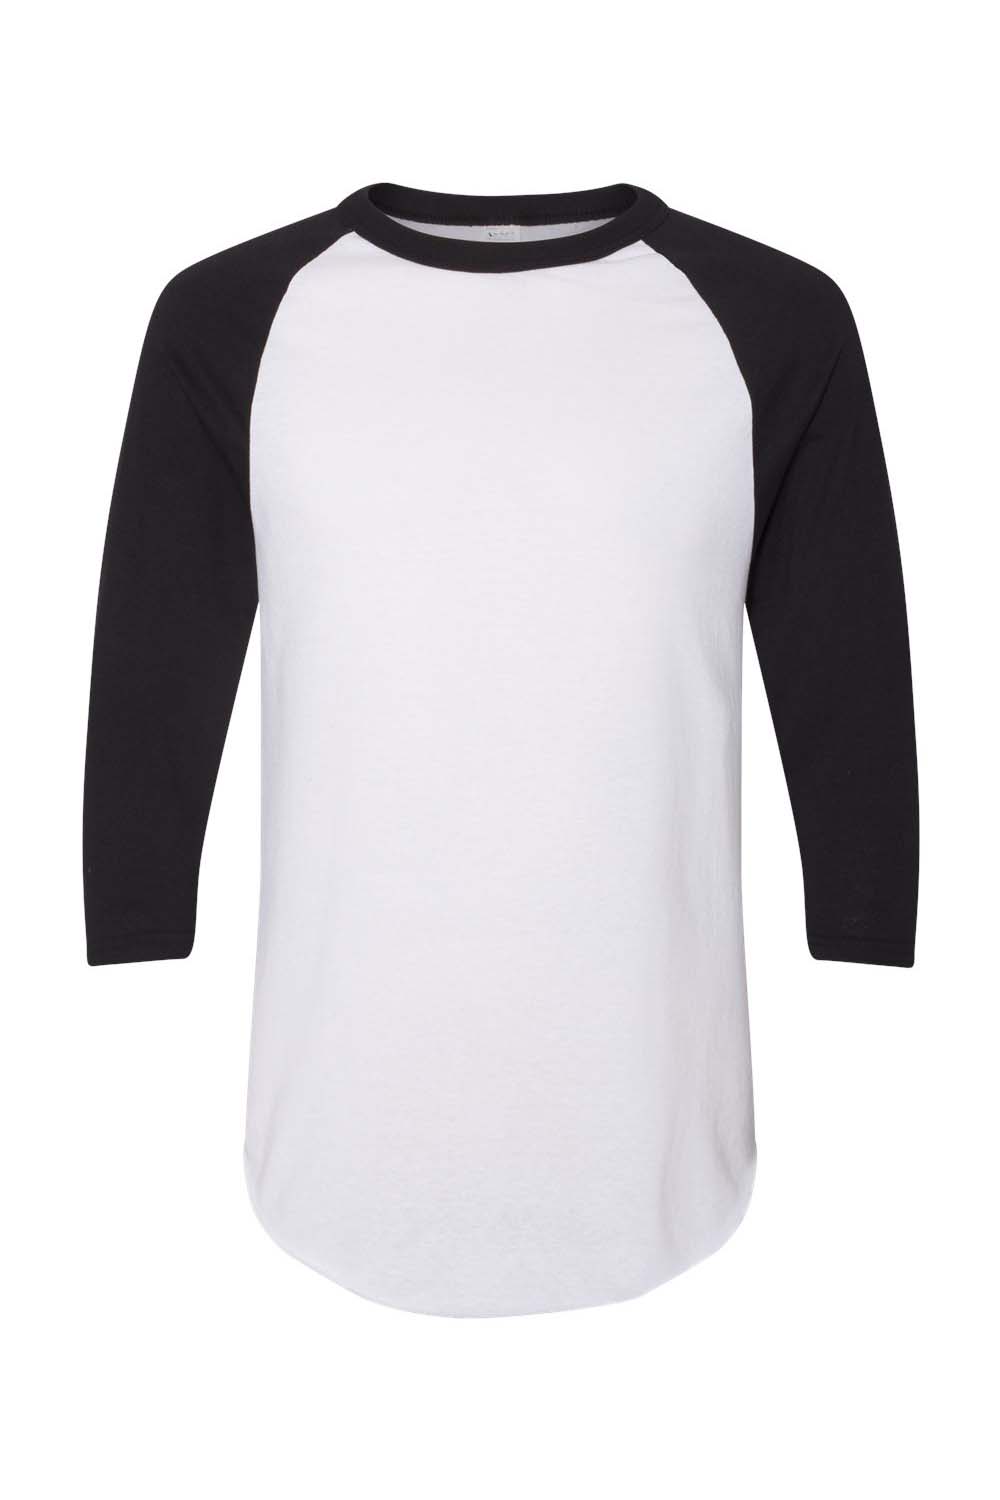 Augusta Sportswear AG4420/4420 Mens 3/4 Sleeve Crewneck T-Shirt White/Black Model Flat Front